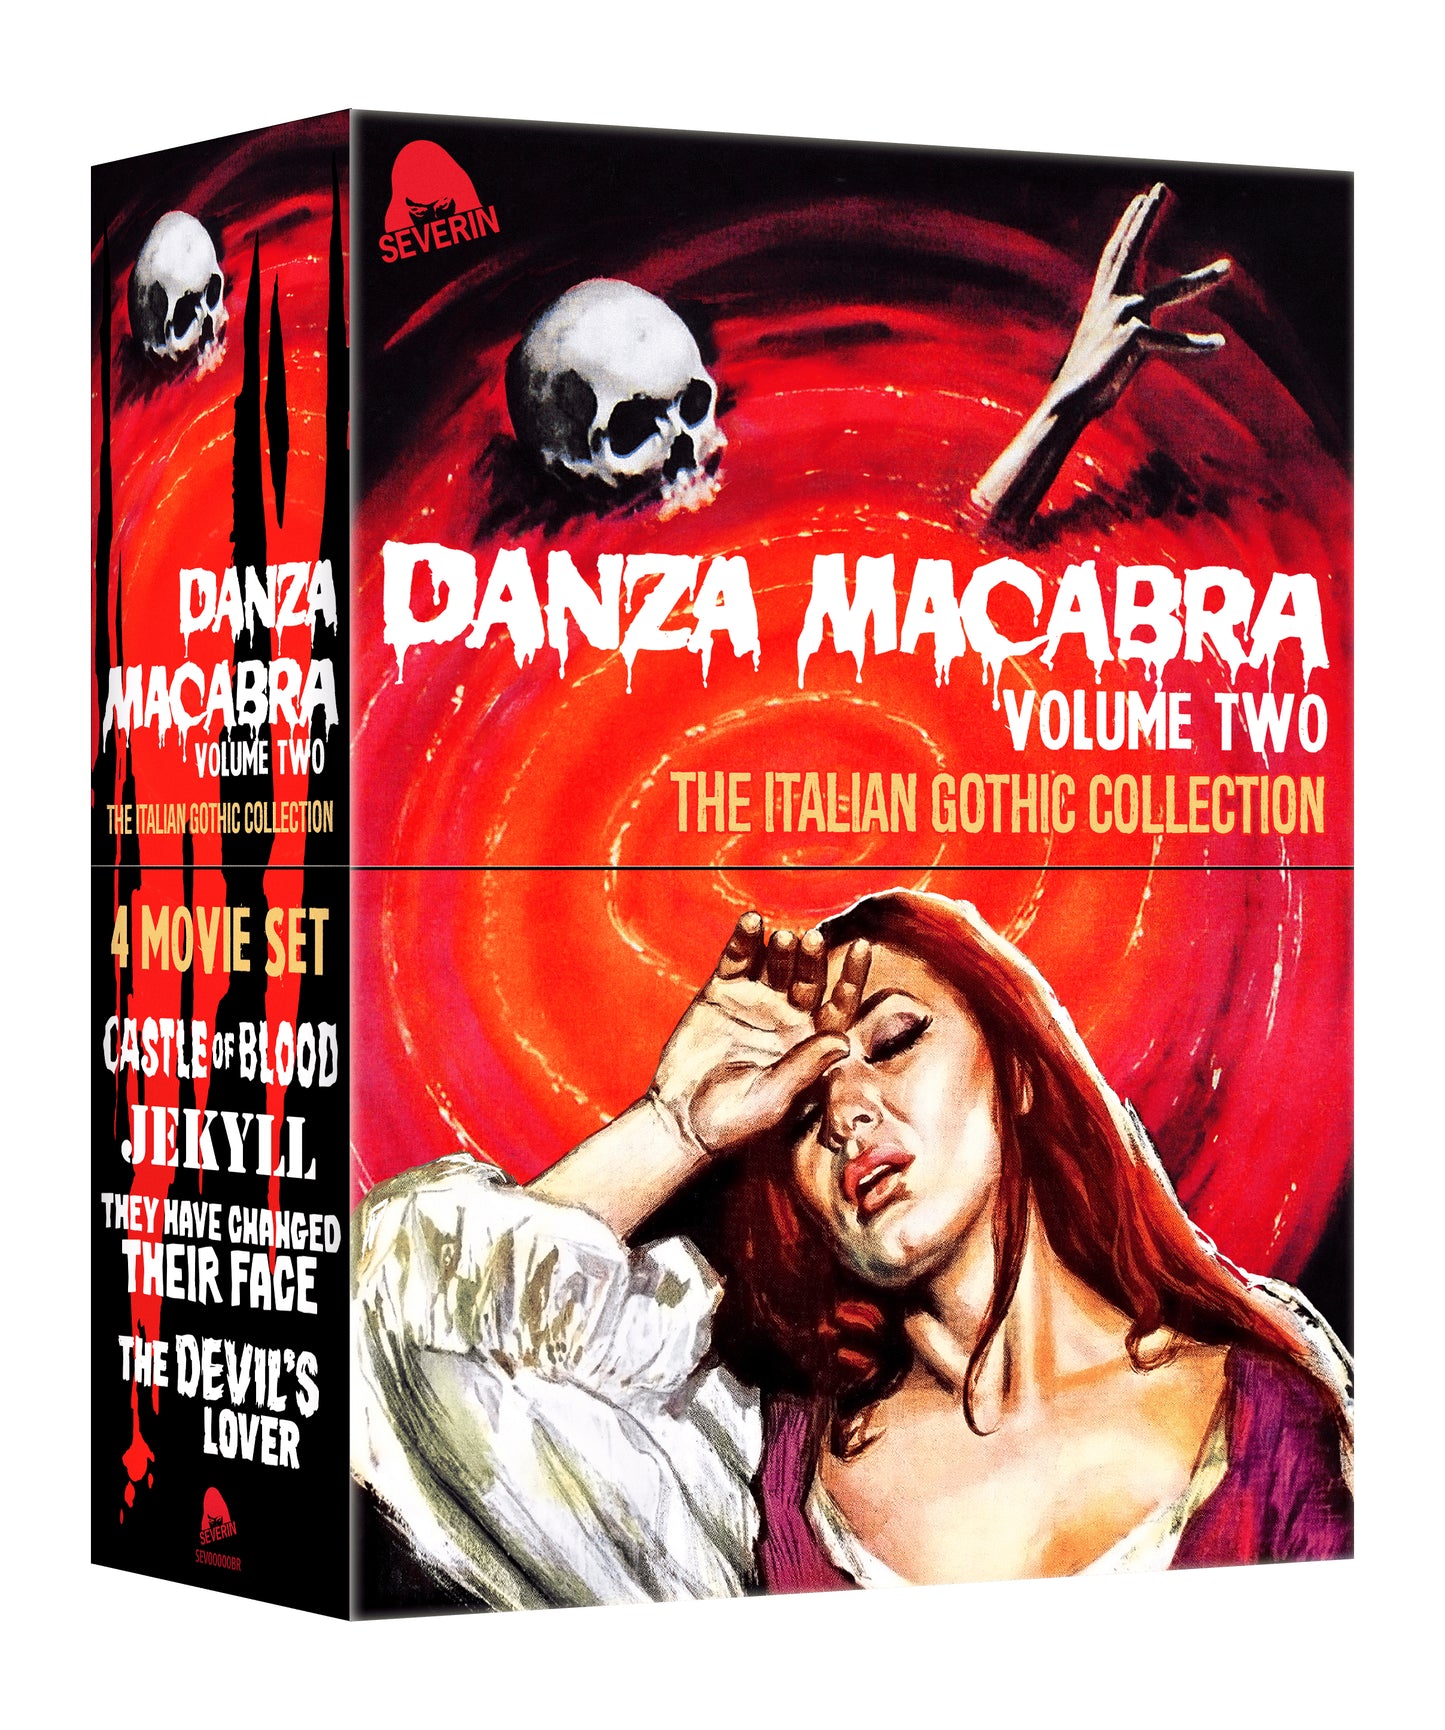 Danza Macabra Volume Two: The Italian Gothic Collection 4K UHD + Blu-ray + CD (Severin U.S.) [Preorder]